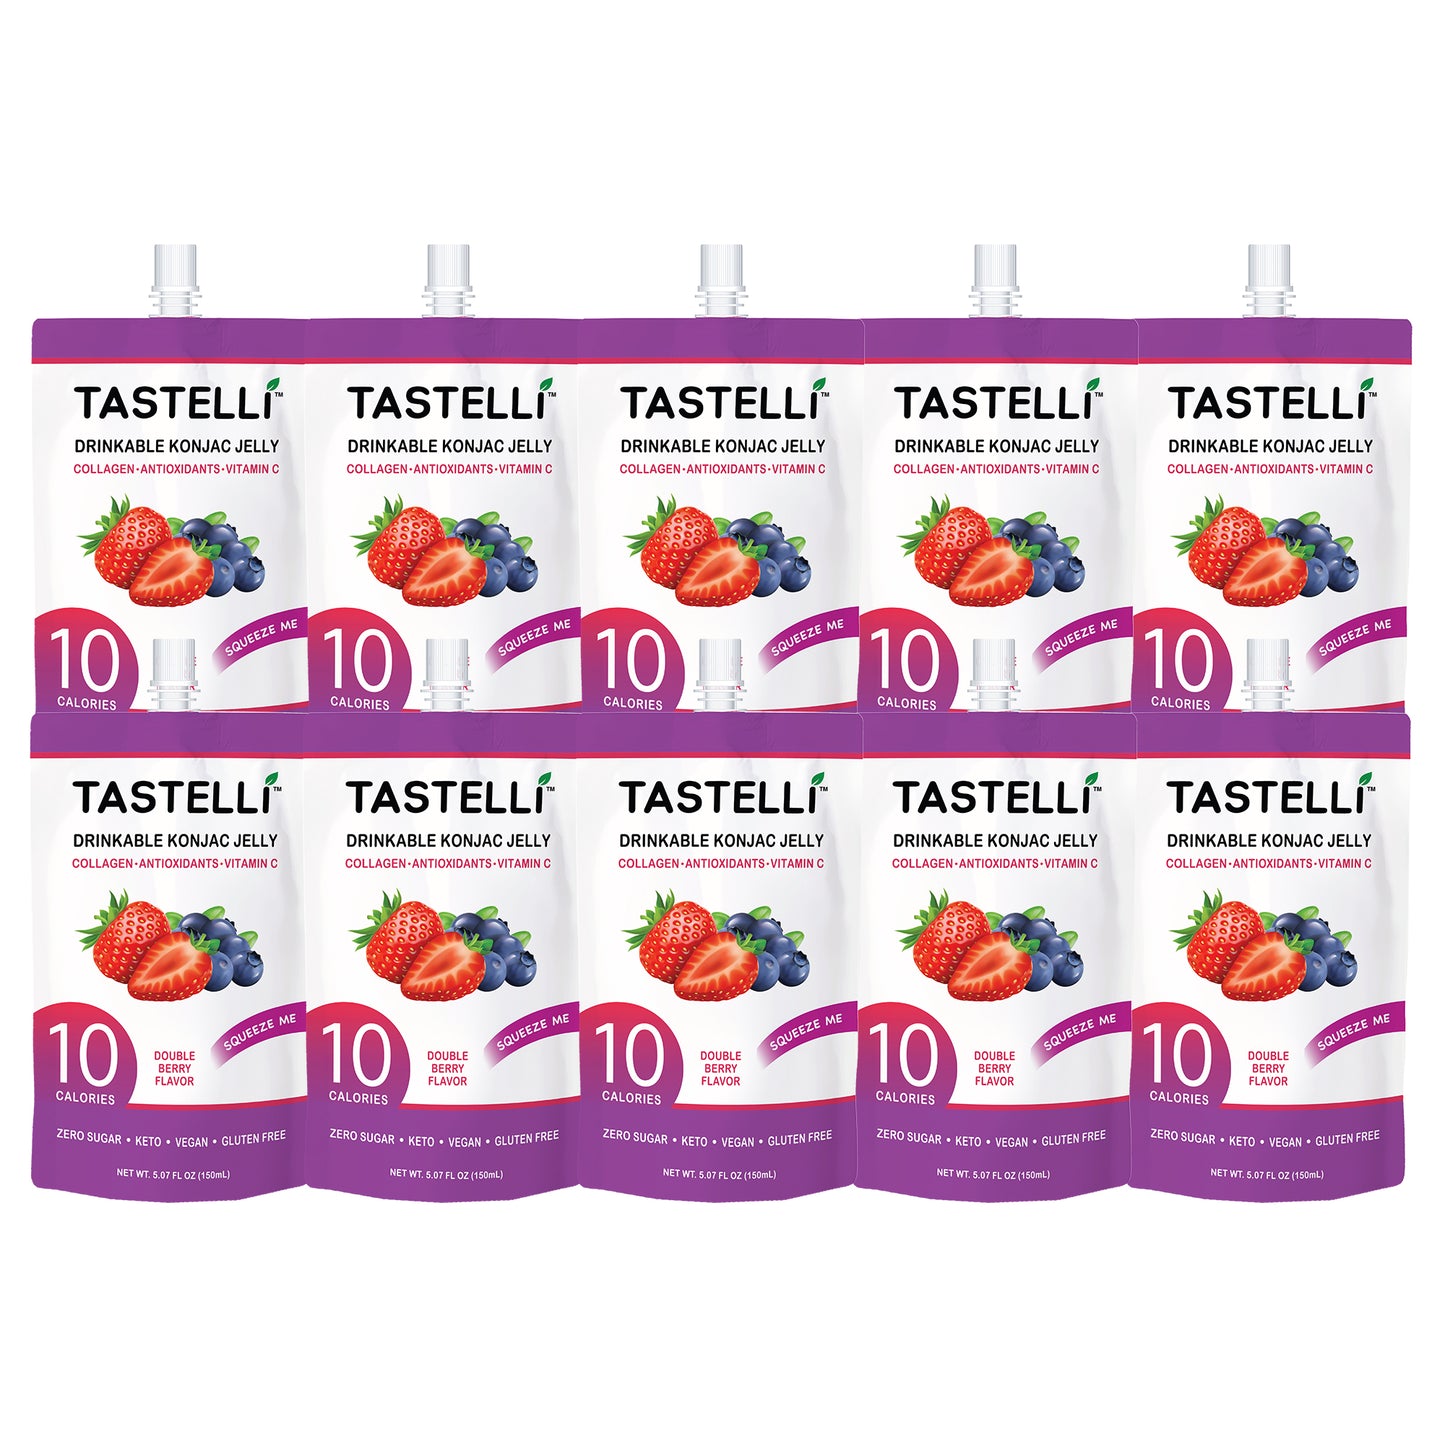 Tastelli Collagen Konjac Jelly Case (150 ml x 10 packs) - Double Berry Flavor - Tastelli Konjac Jelly